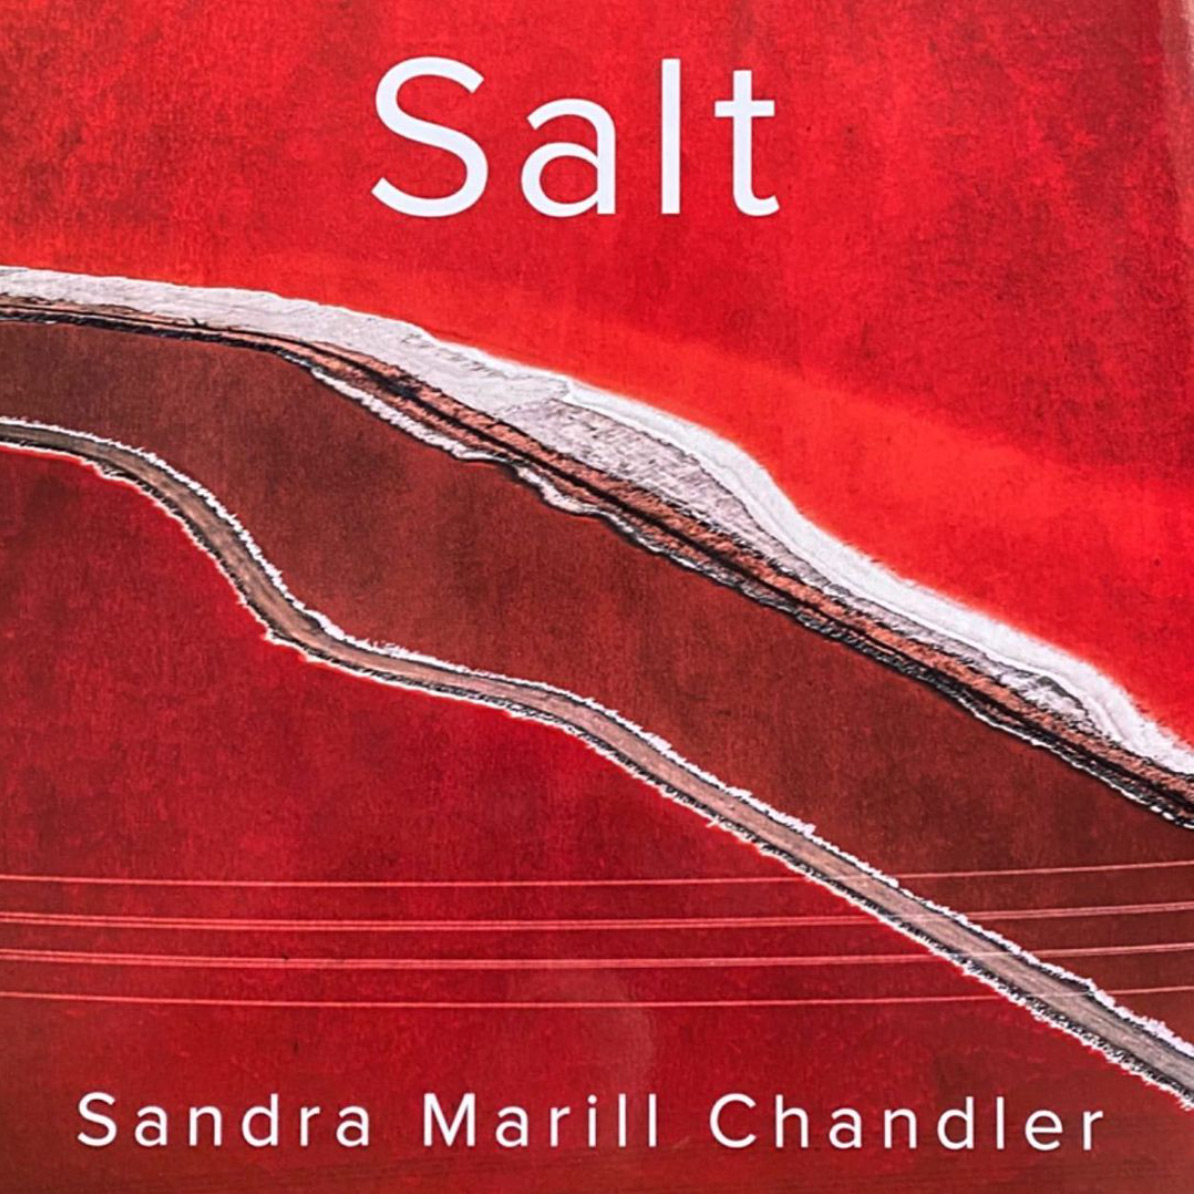 Salt by Sandra Marill Chandler